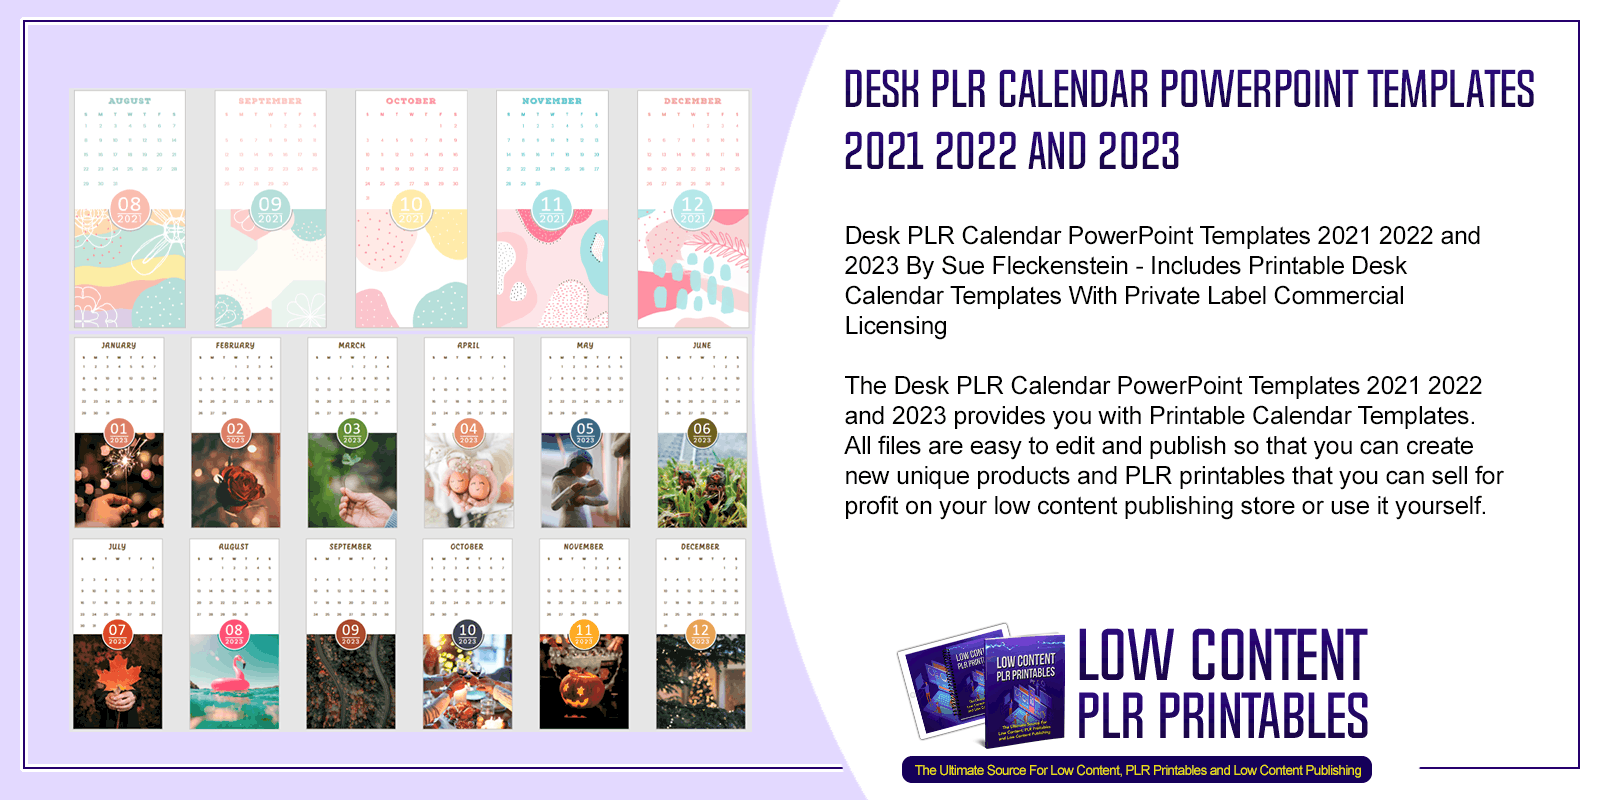 Desk PLR Calendar PowerPoint Templates 2021 2022 and 2023